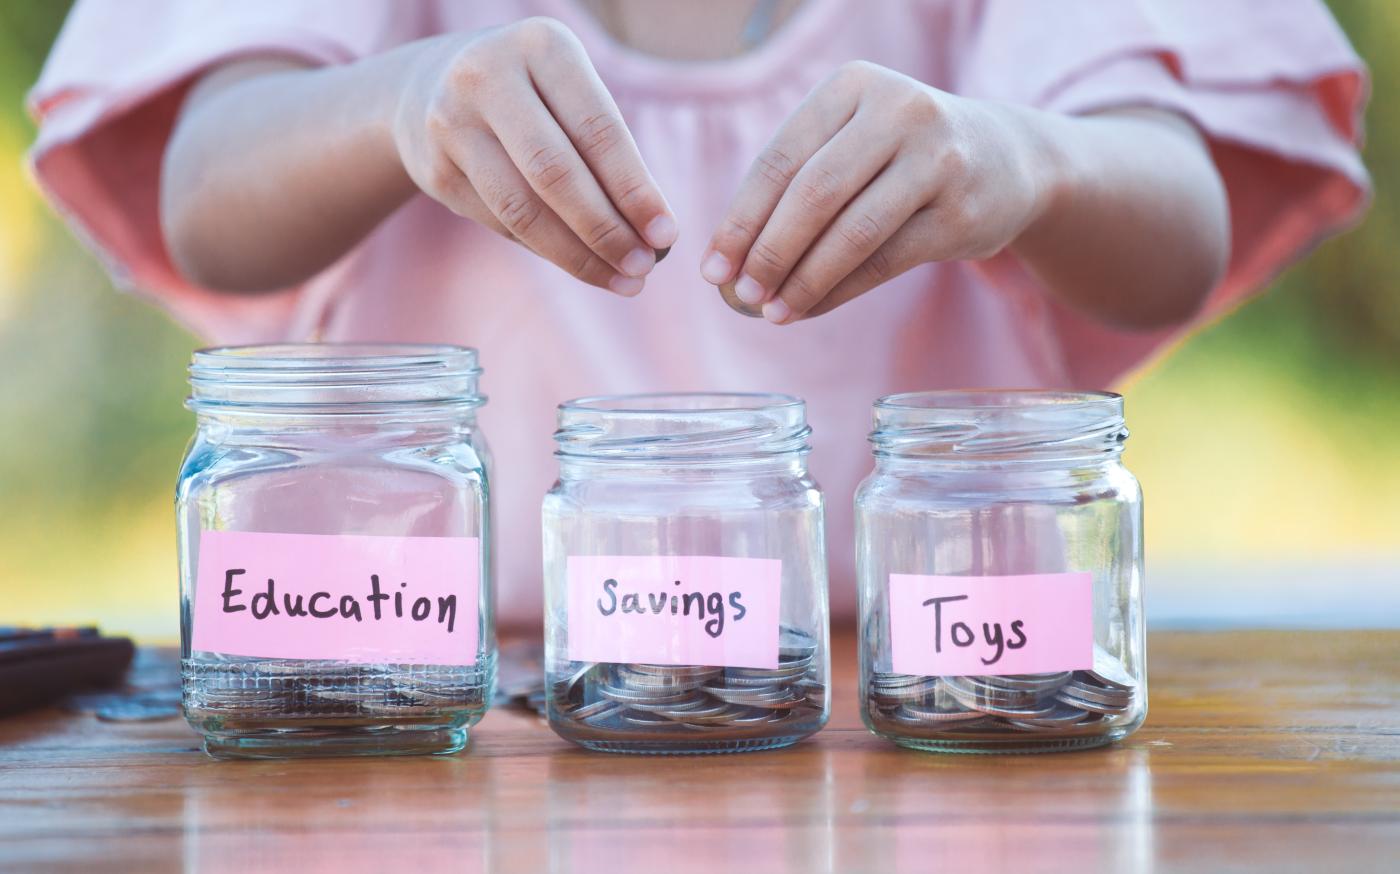 Child Saving For Education, Savings, Toys 